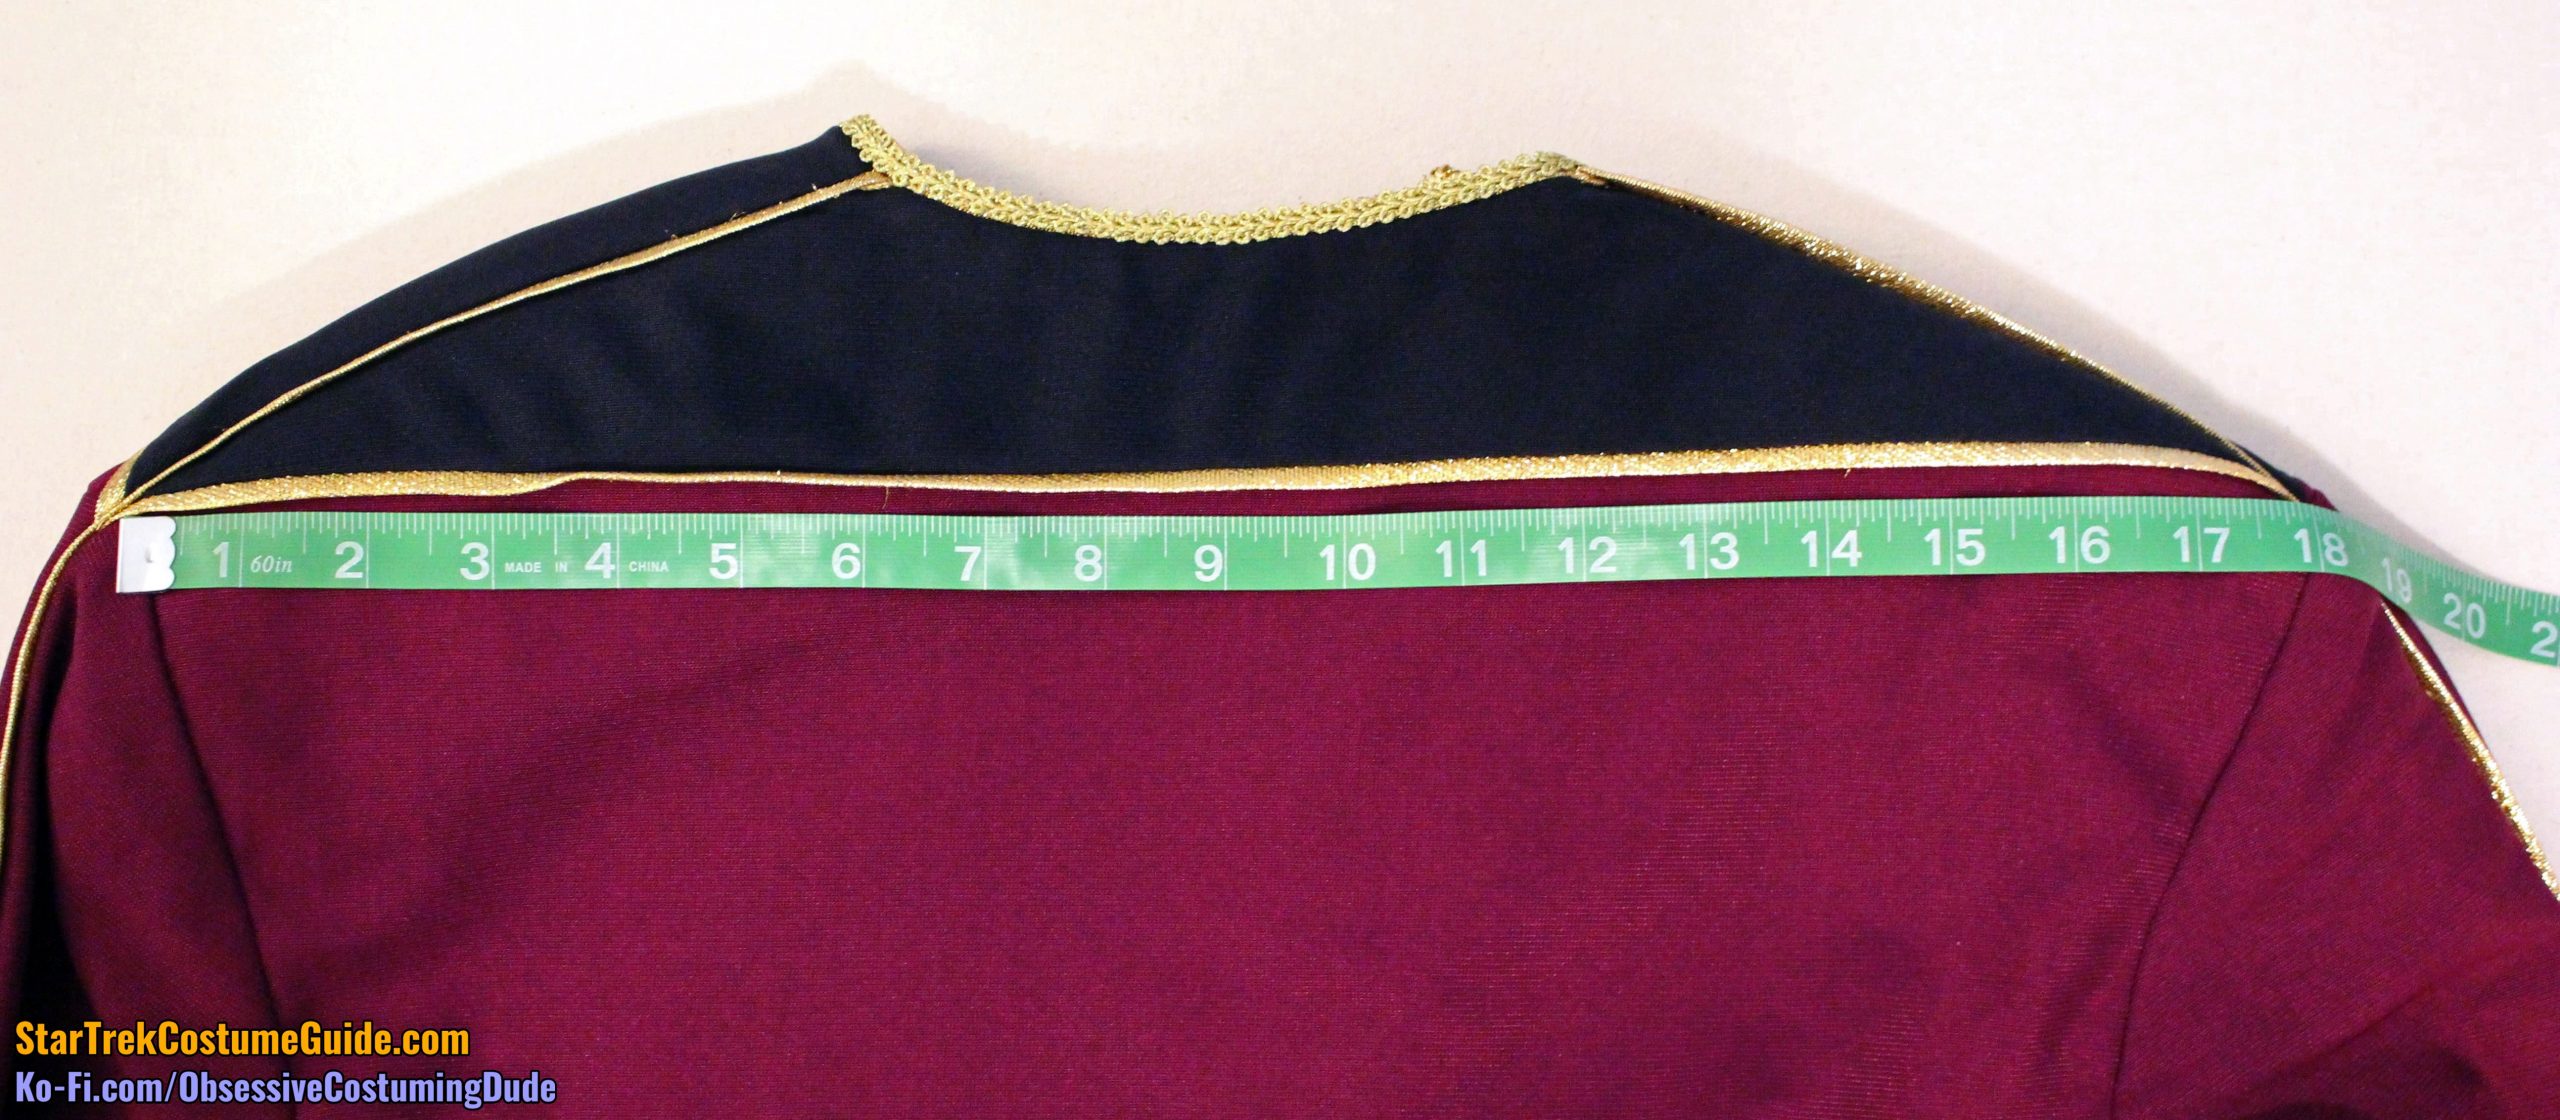 TNG admiral uniform (season 1) examination - Star Trek Costume Guide